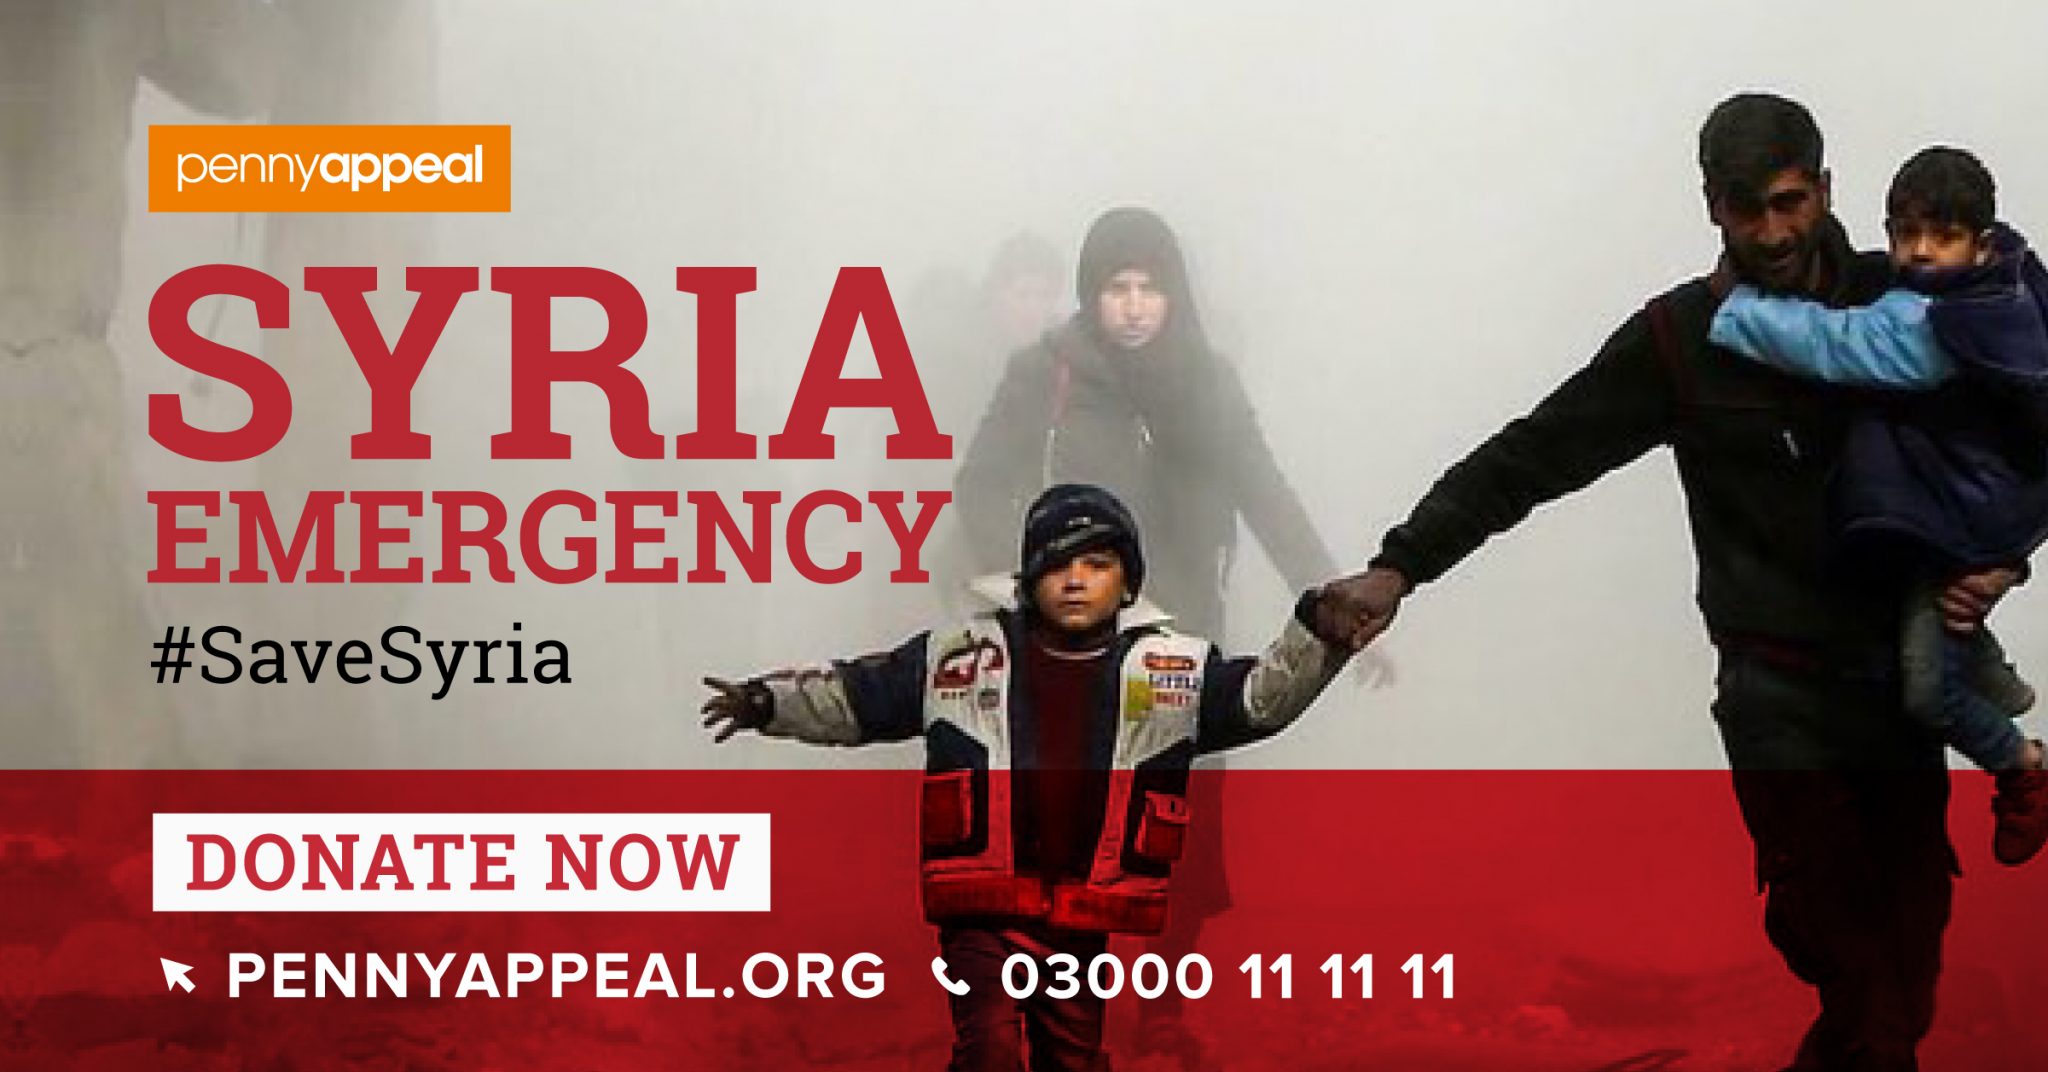 Syria Emergency. Penny Appeal org